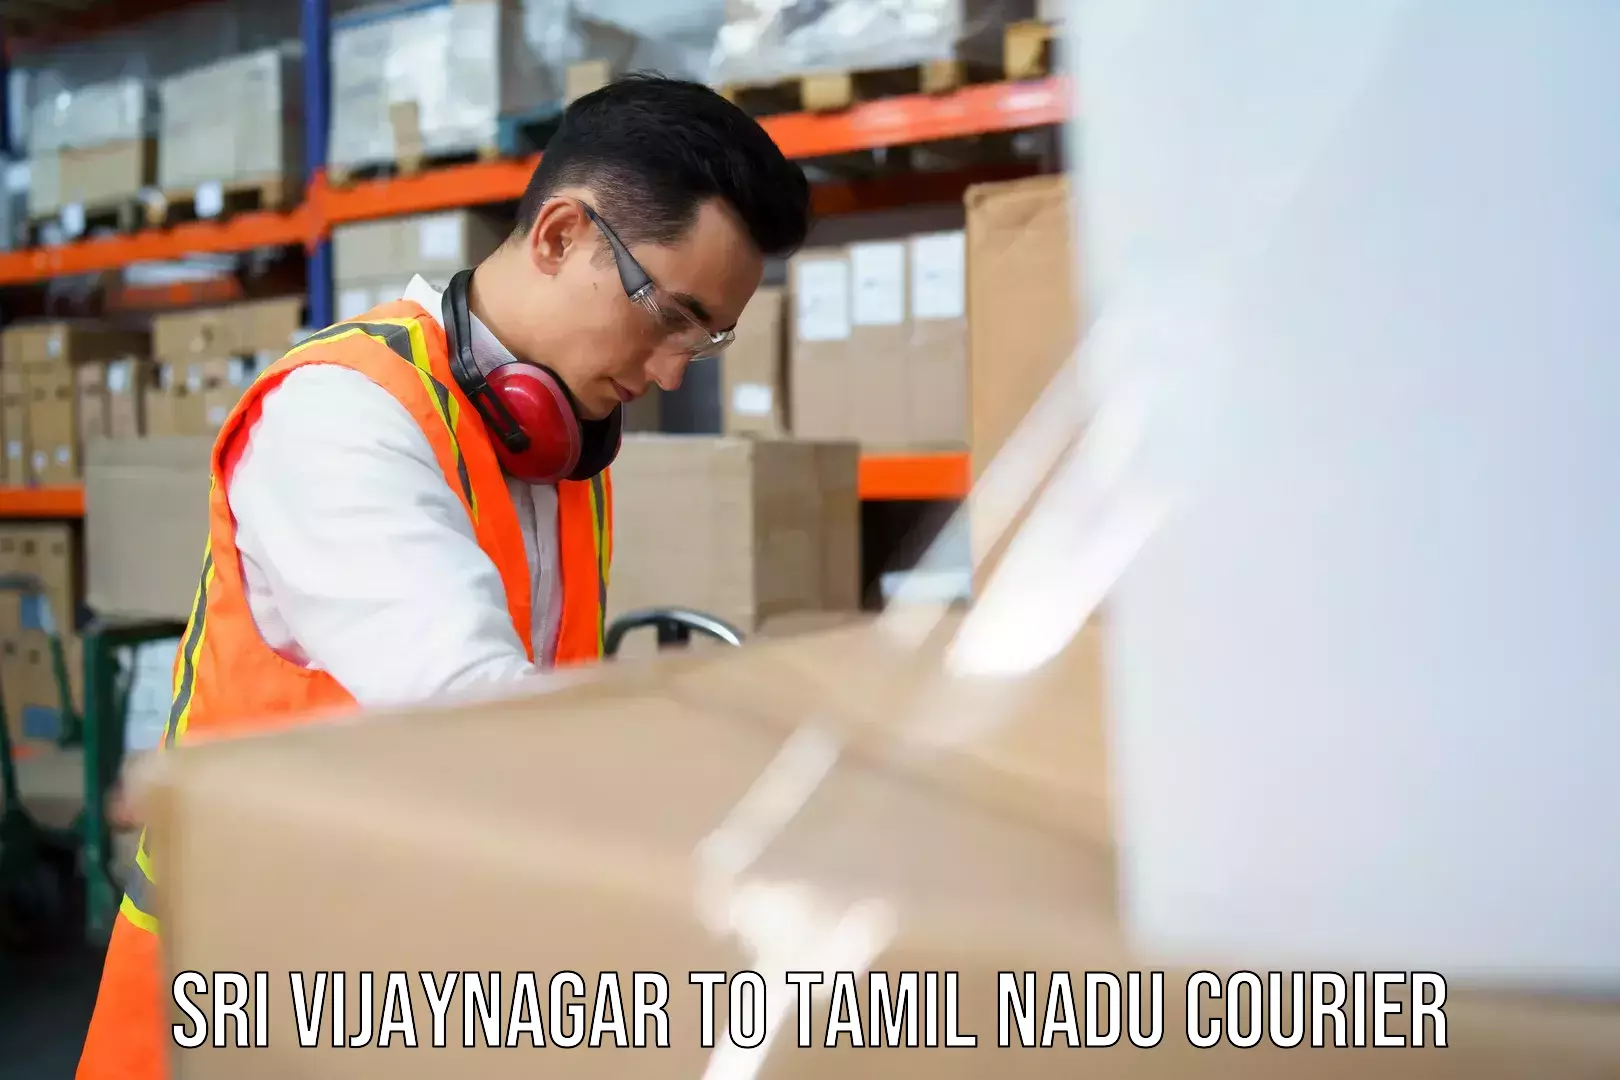 High-capacity parcel service Sri Vijaynagar to Thiruvadanai